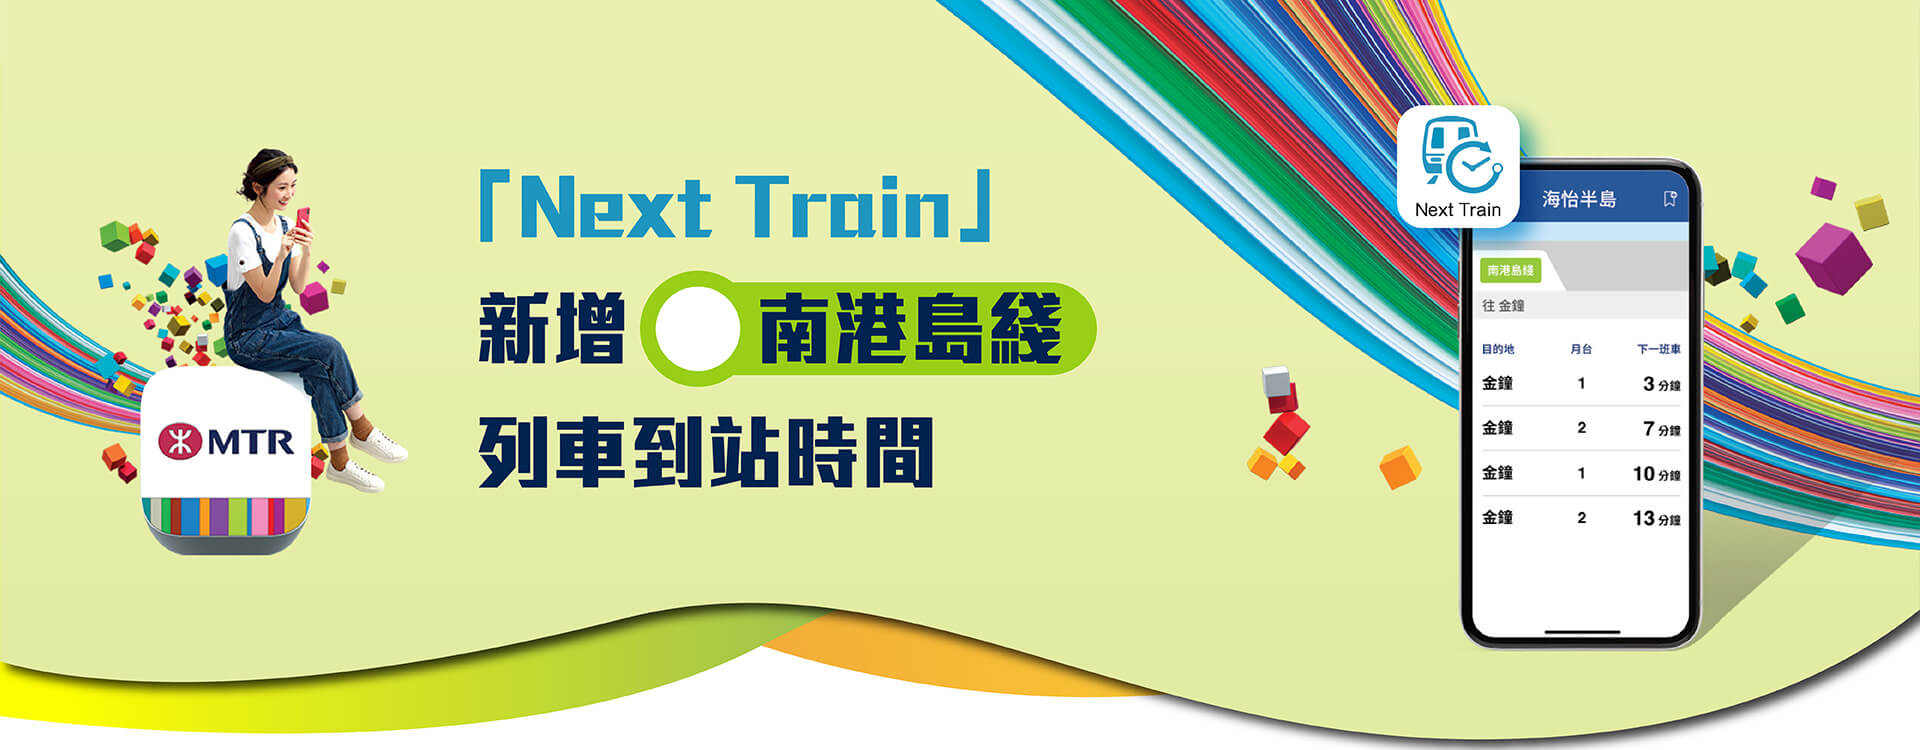 MTR Mobile「Next Train」 新增南港島綫列車到站時間